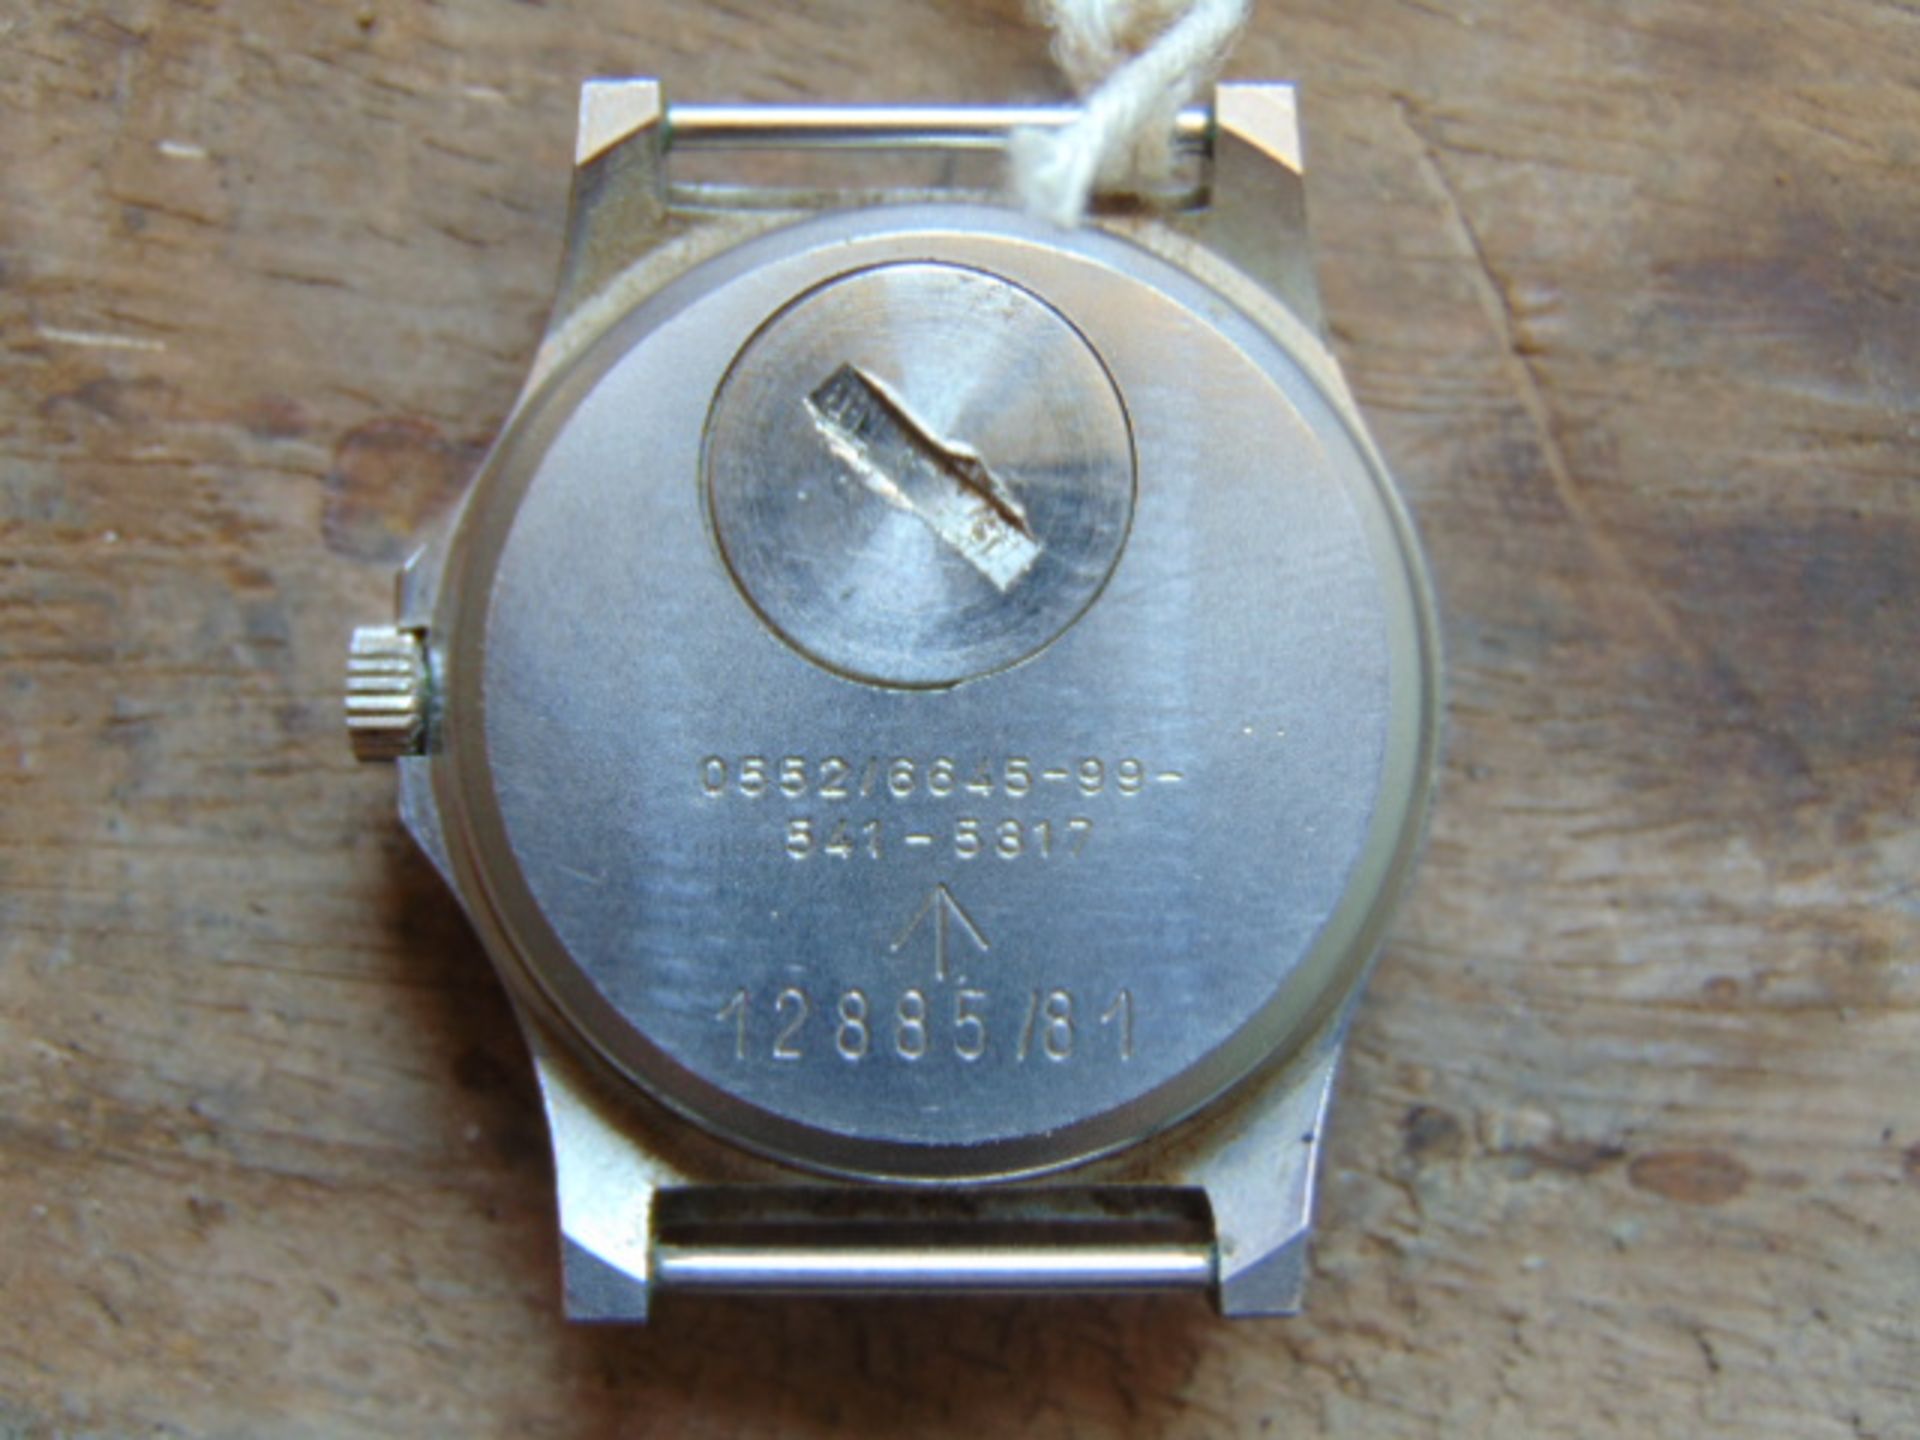 1 Genuine British Army CWC (Fat Boy/Fat Case) quartz wrist watch - Image 4 of 4